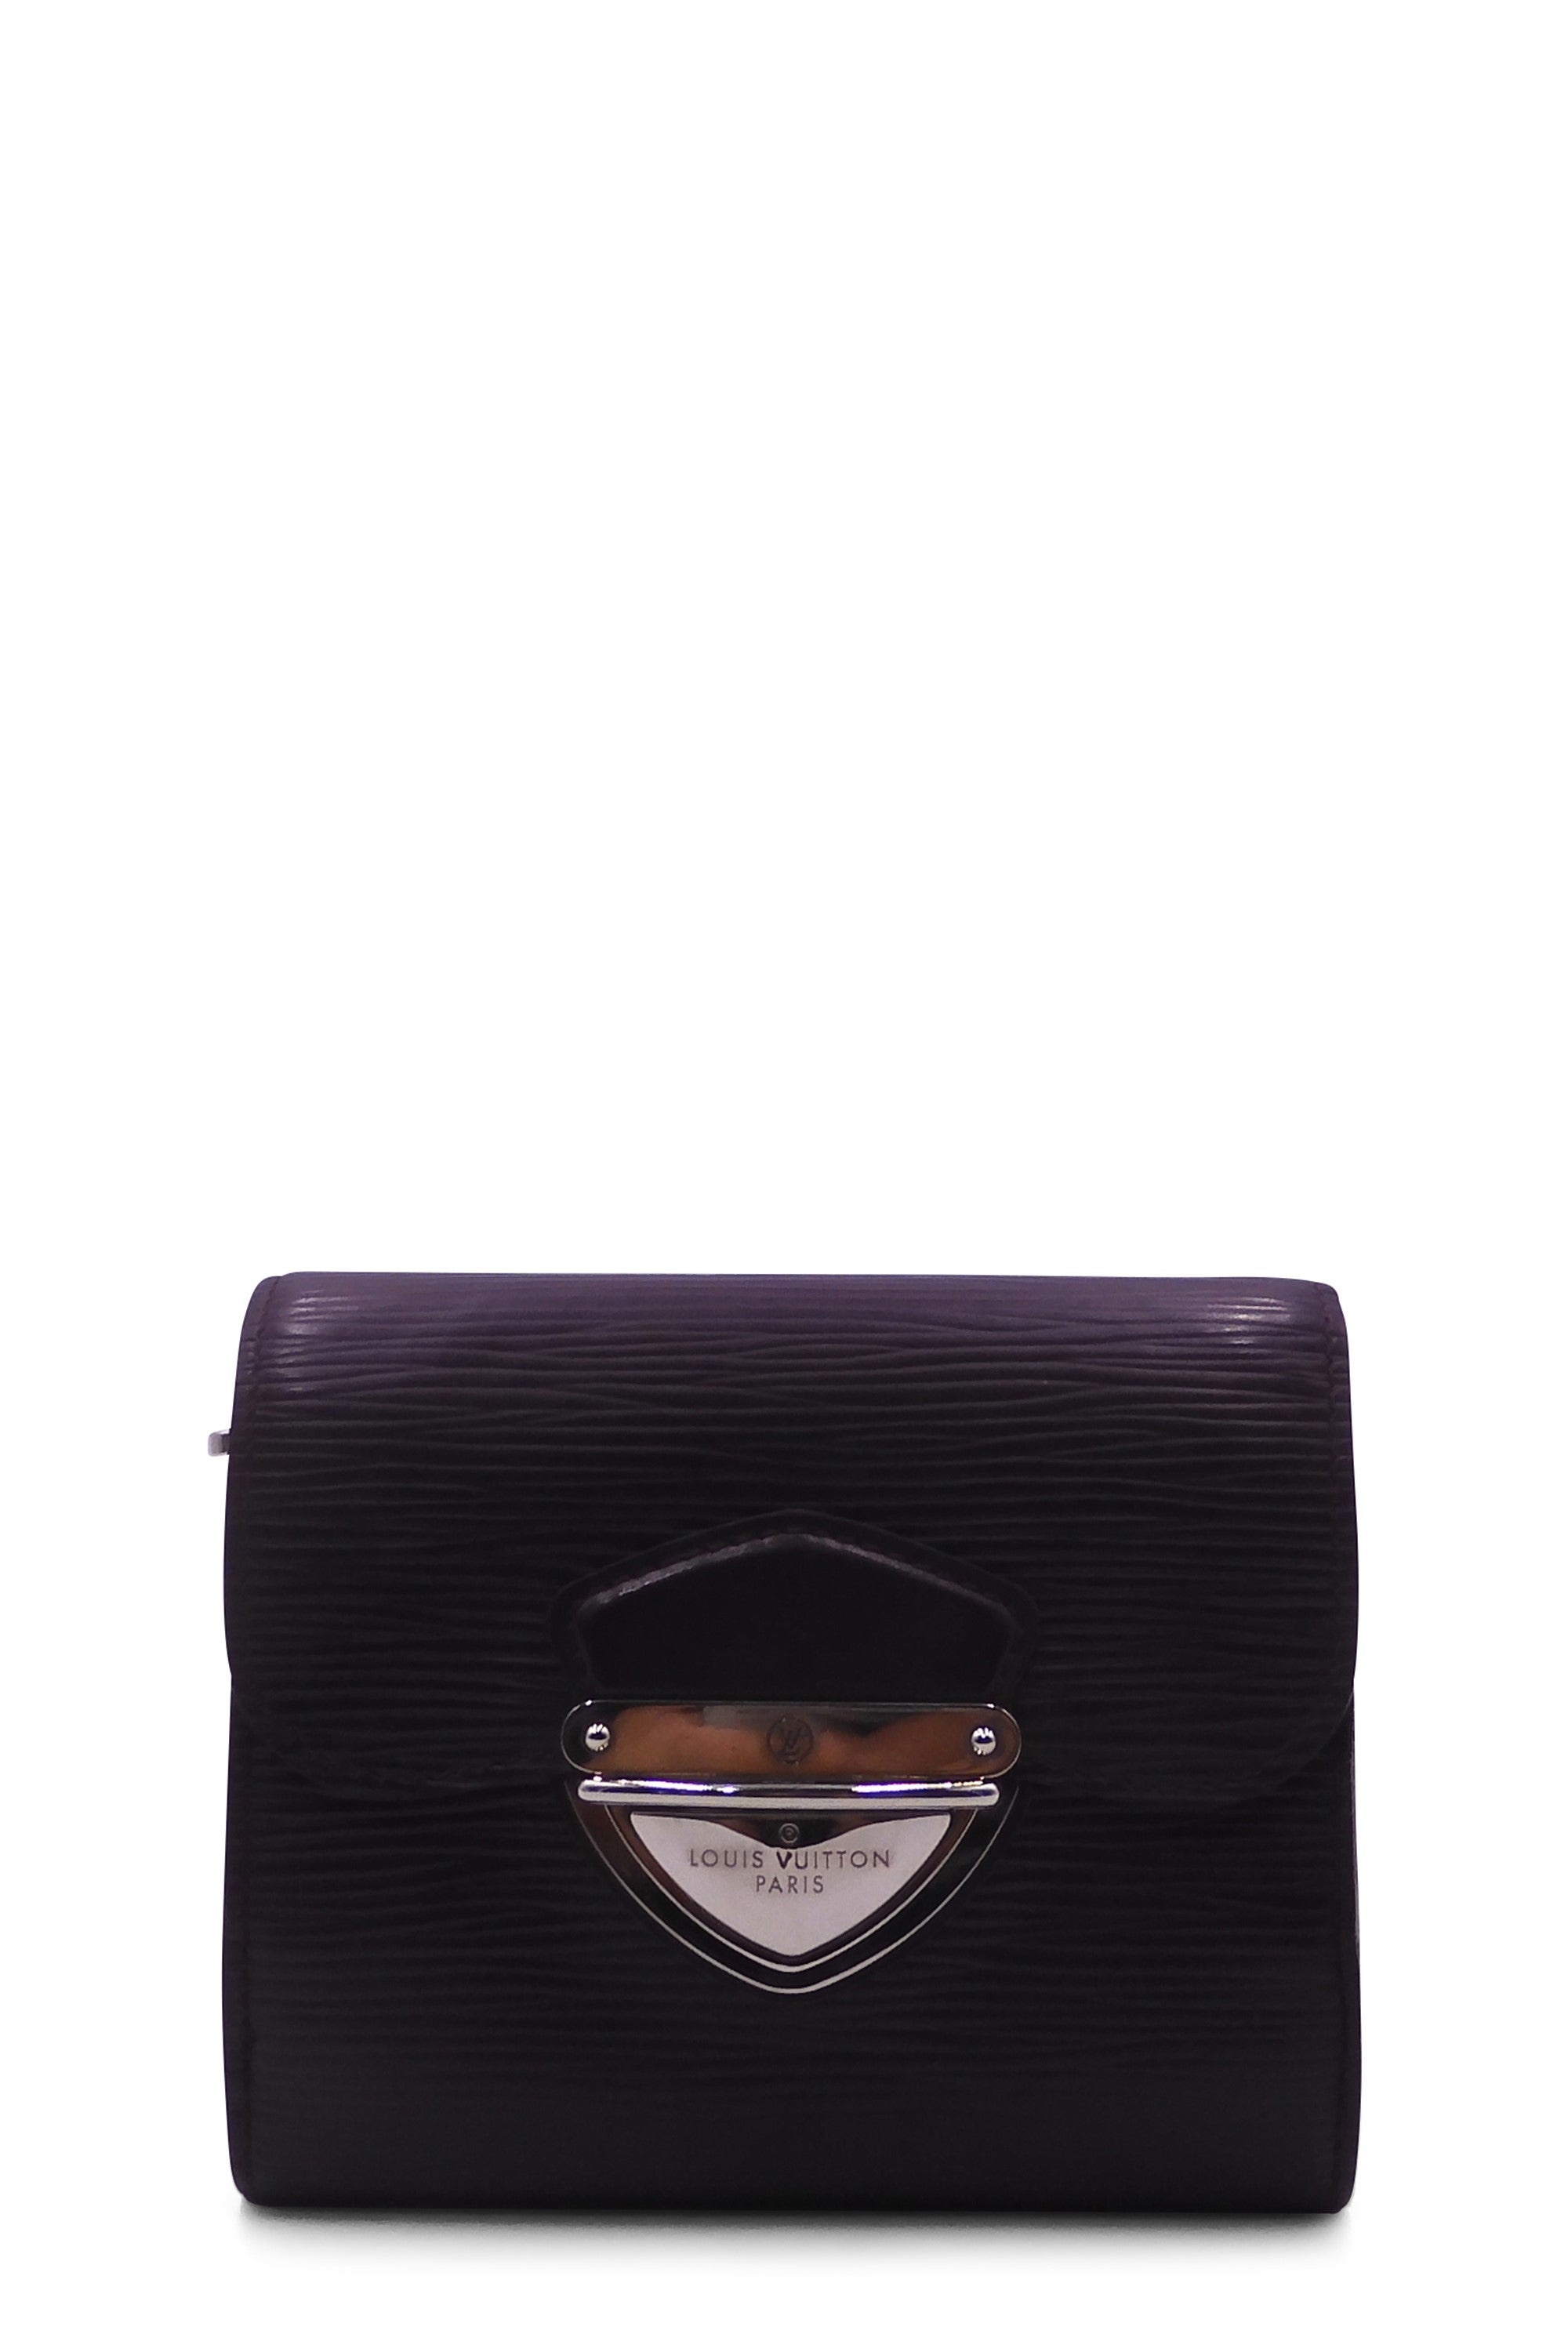 Louis Vuitton Wallet Joey Purple Epi Leather Trifold Wallet Mini